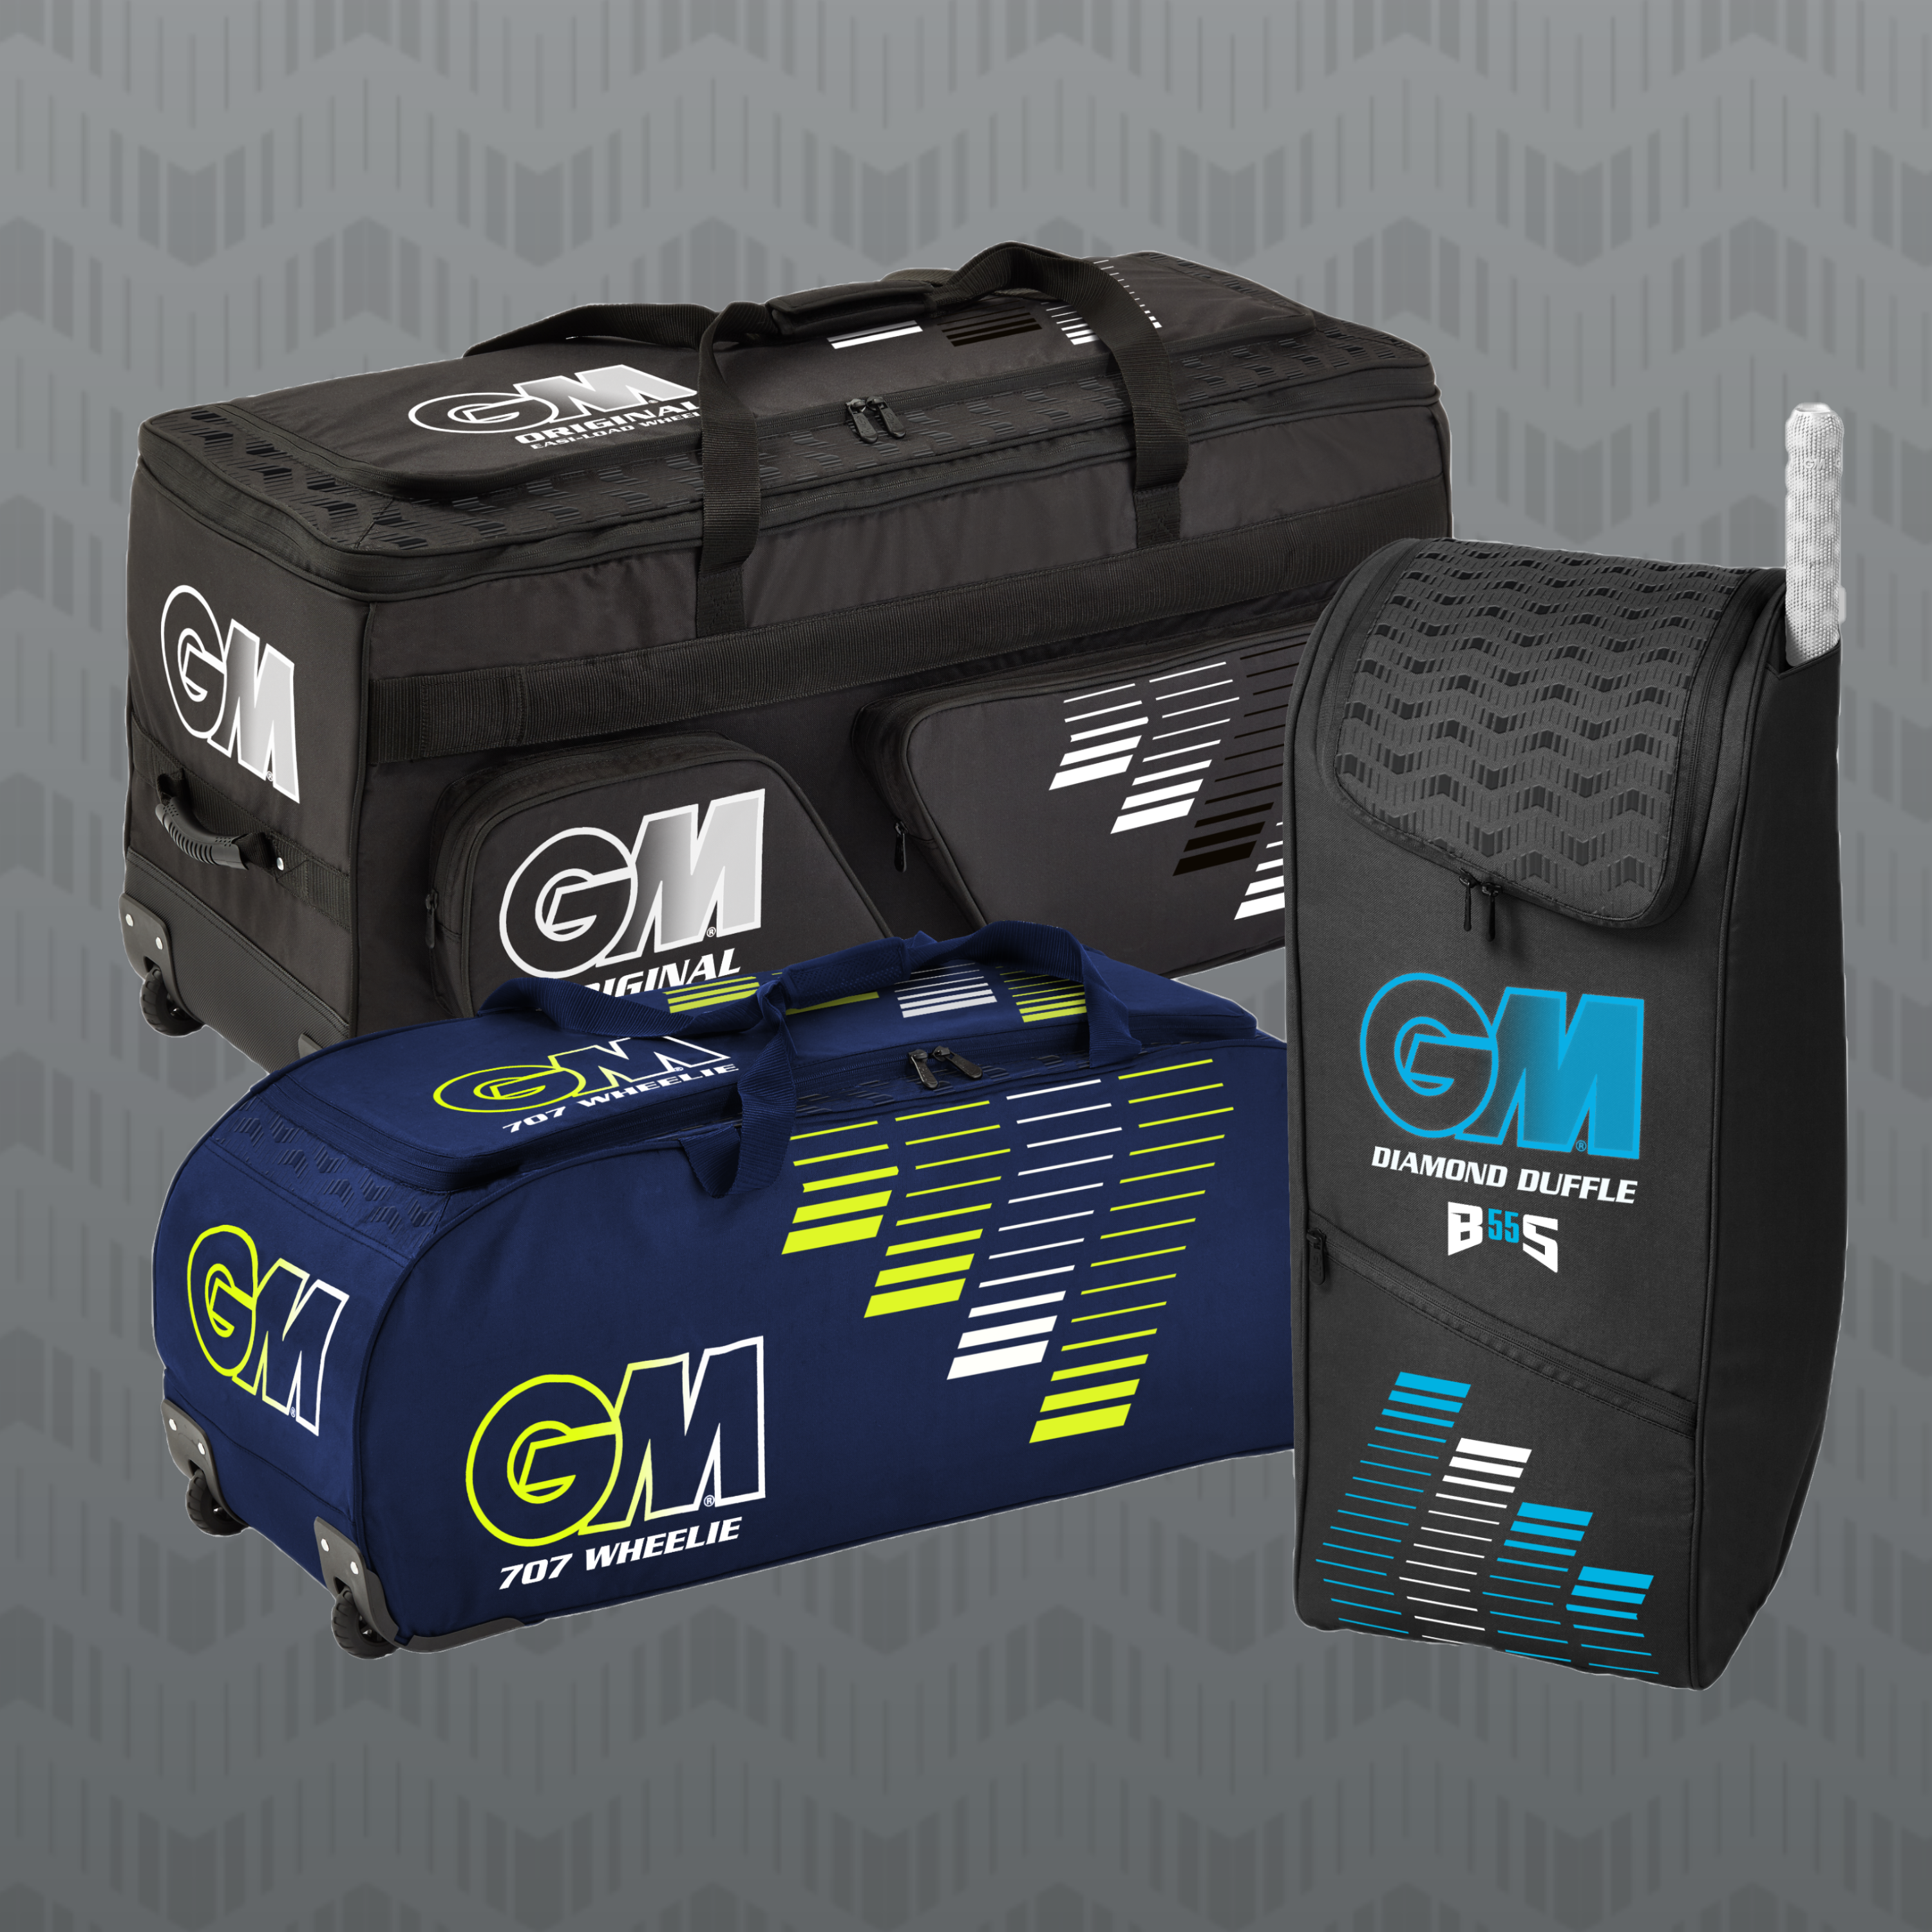 Grays G300 Hockey Stick and Kit Bag